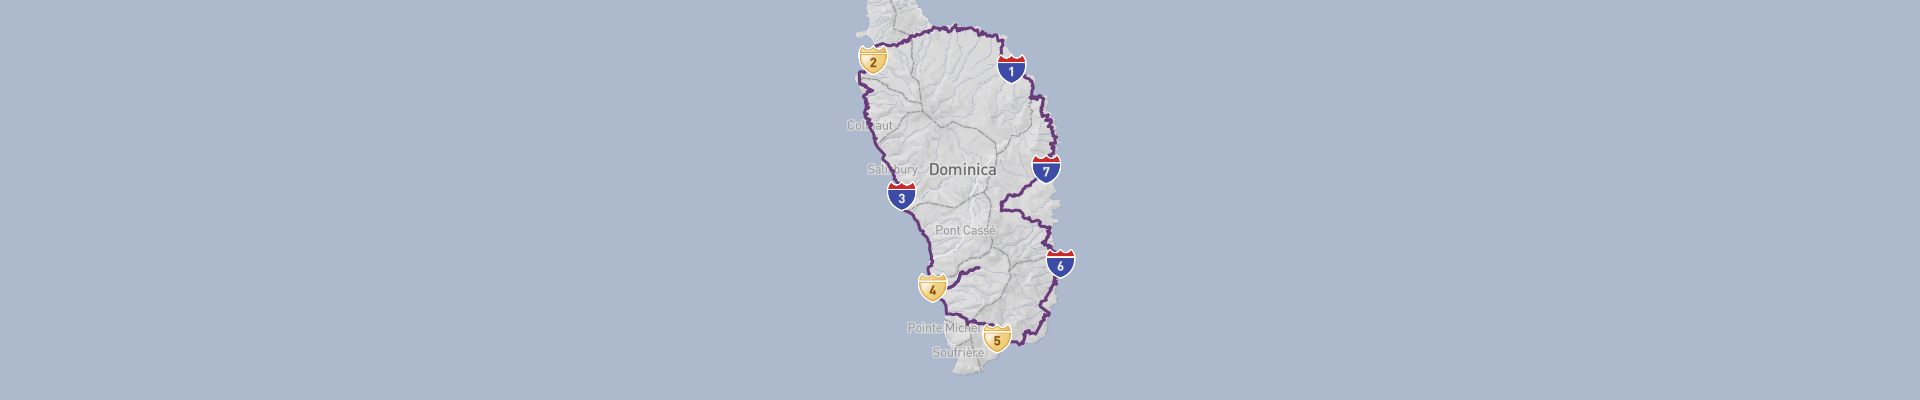 Dominica Itinéraire 